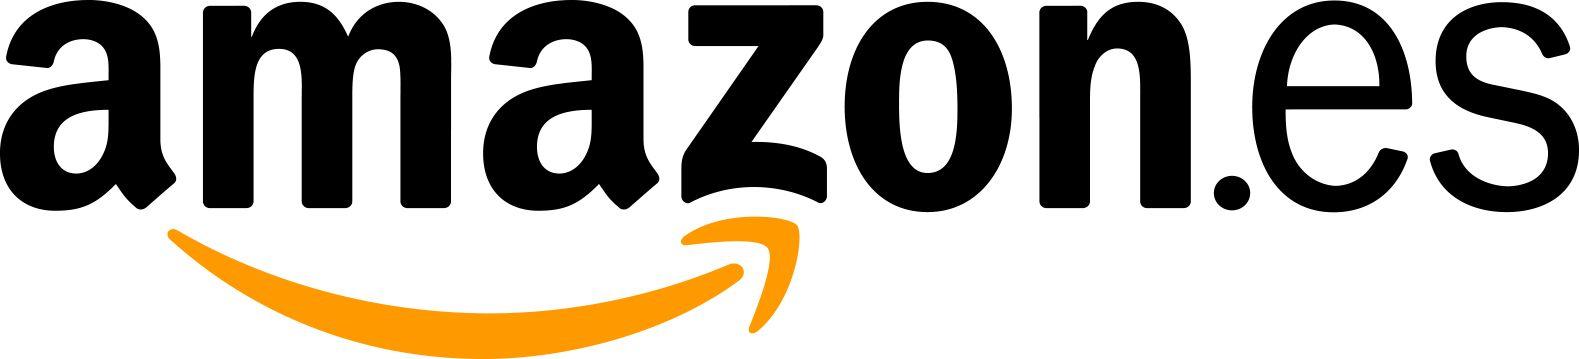 Amazon Corporate Logo - Images - Logos